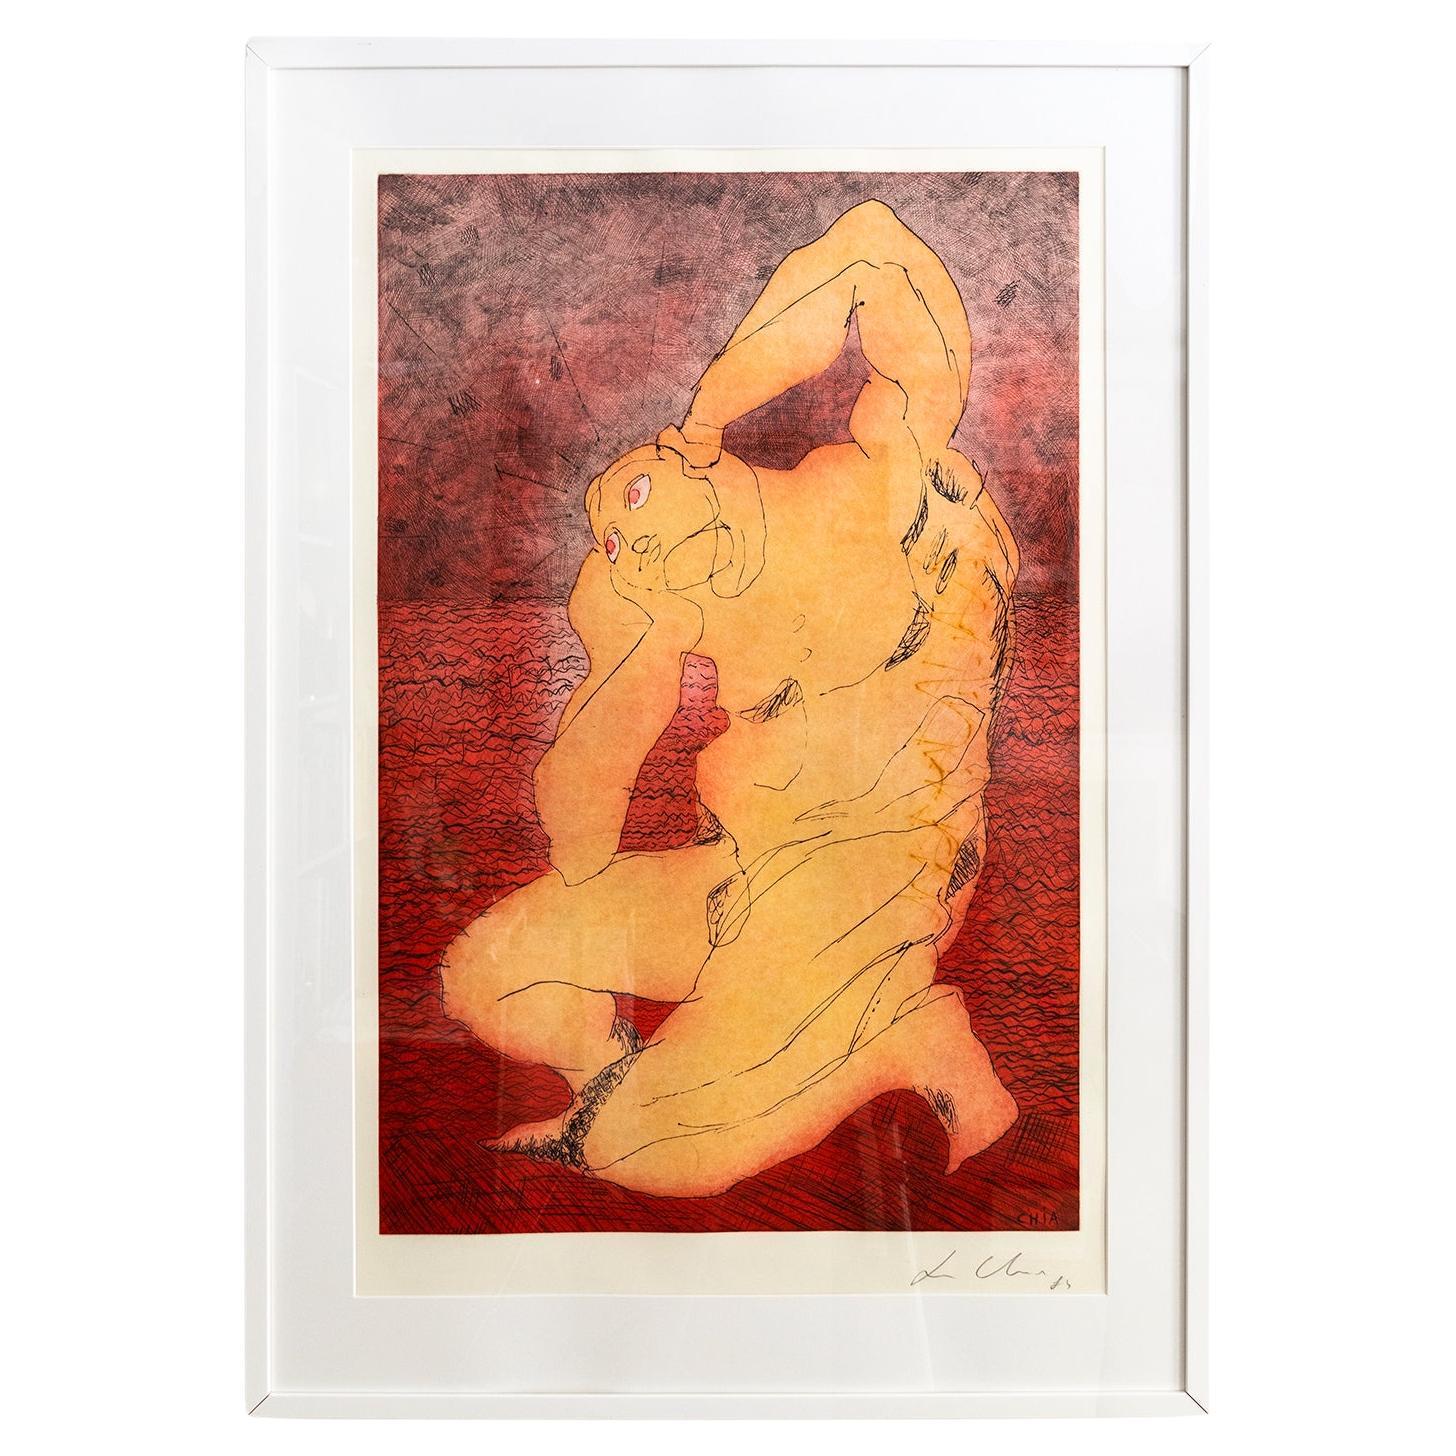 Sandro Chia Aquatint Print in Red & Yellow, "Man & Sea" Post Modern For Sale